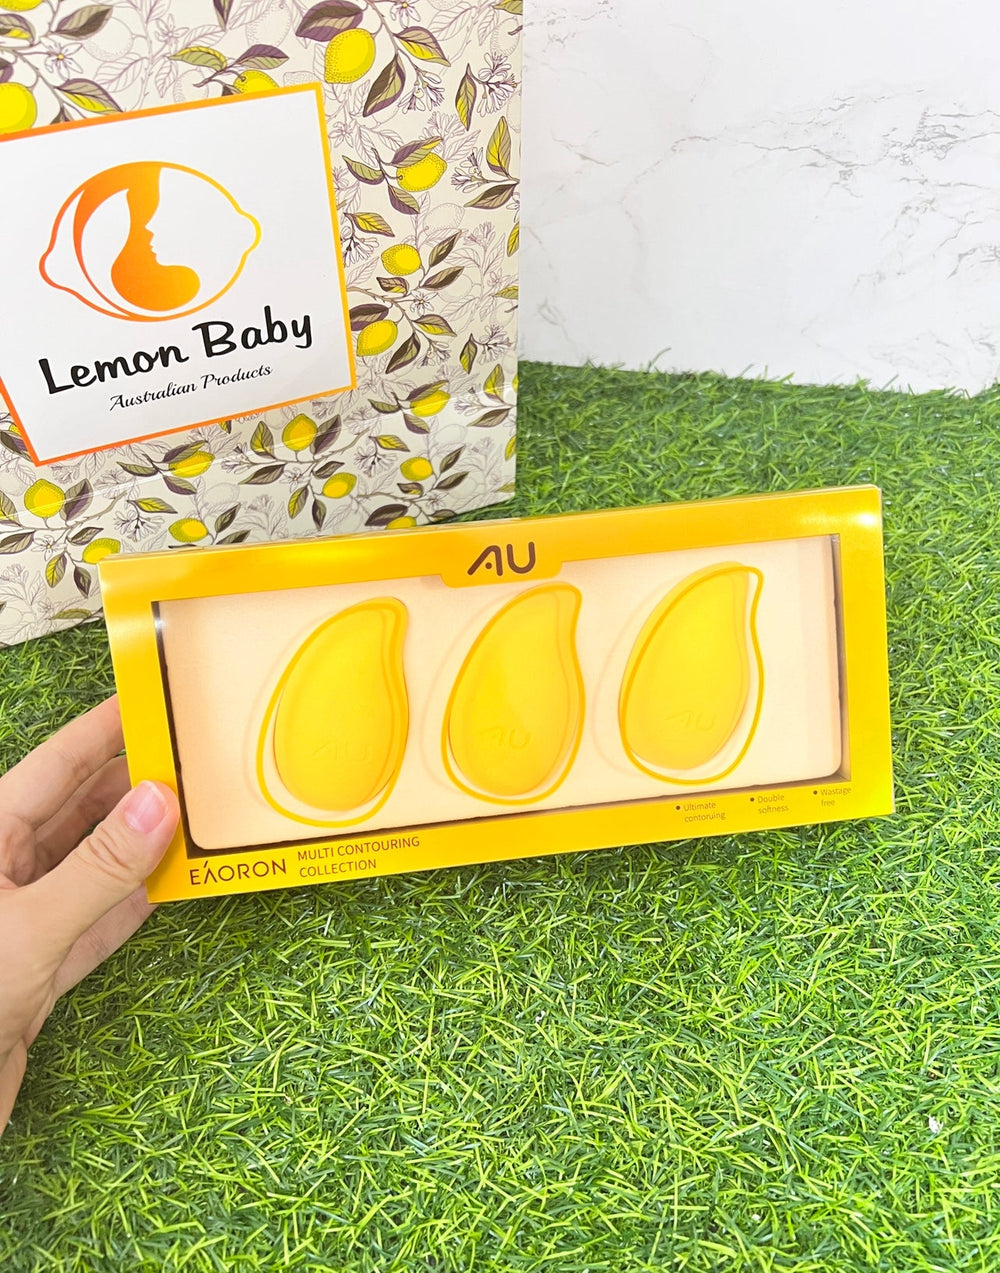 Eaoron multi contouring collection - Lemonbaby